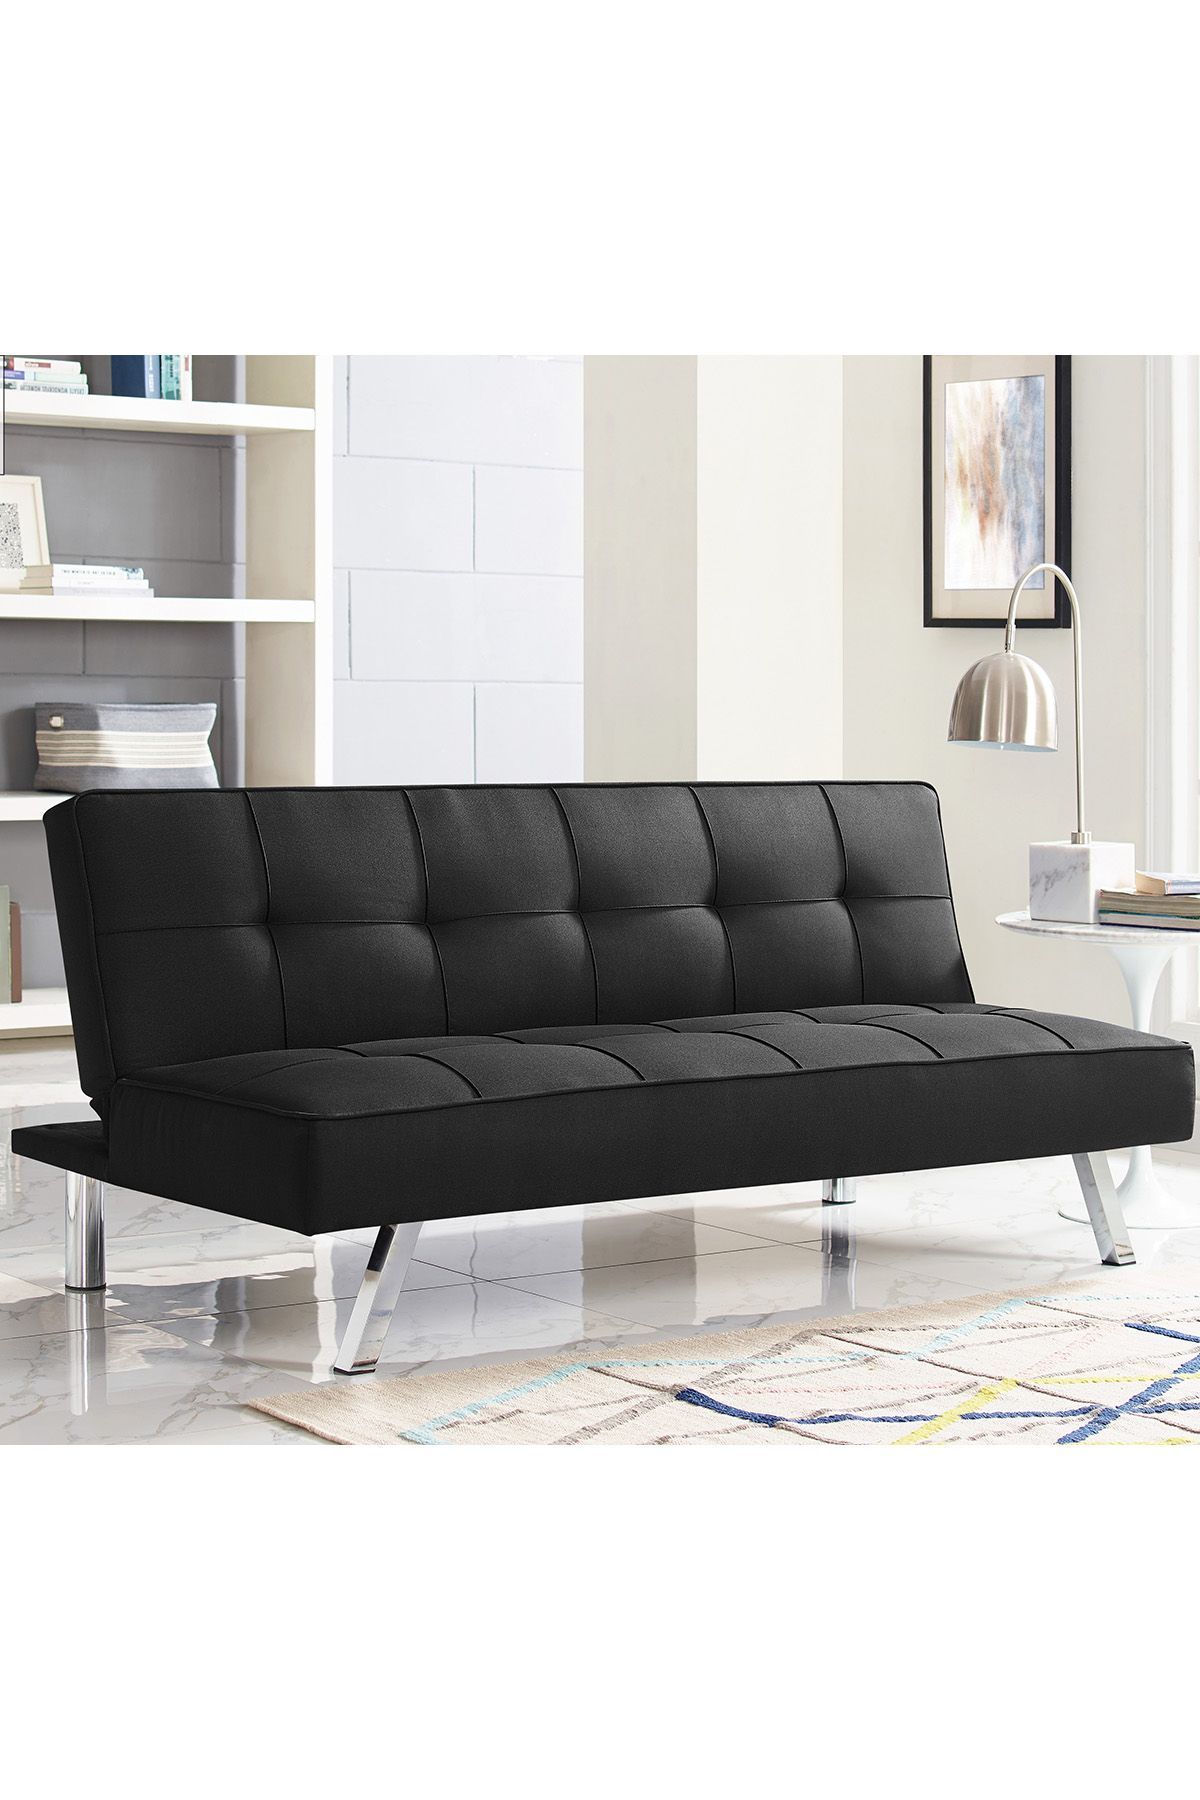 Serta Chelsea 3-Seat Multi-function Upholstery Fabric Sofa